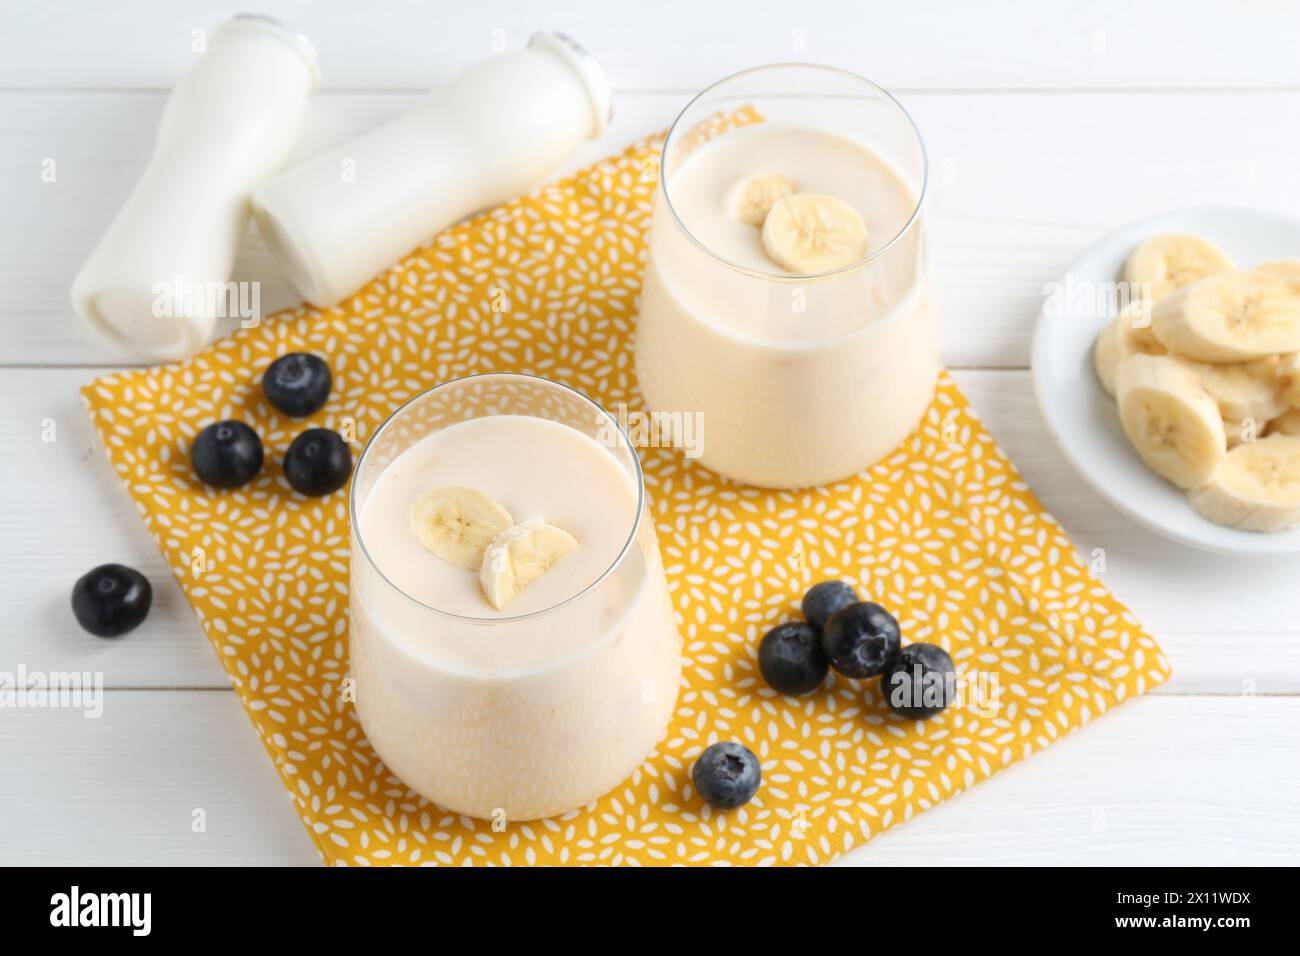 Tasty yogurt, banana and blueberries on white wooden table Stock Photo